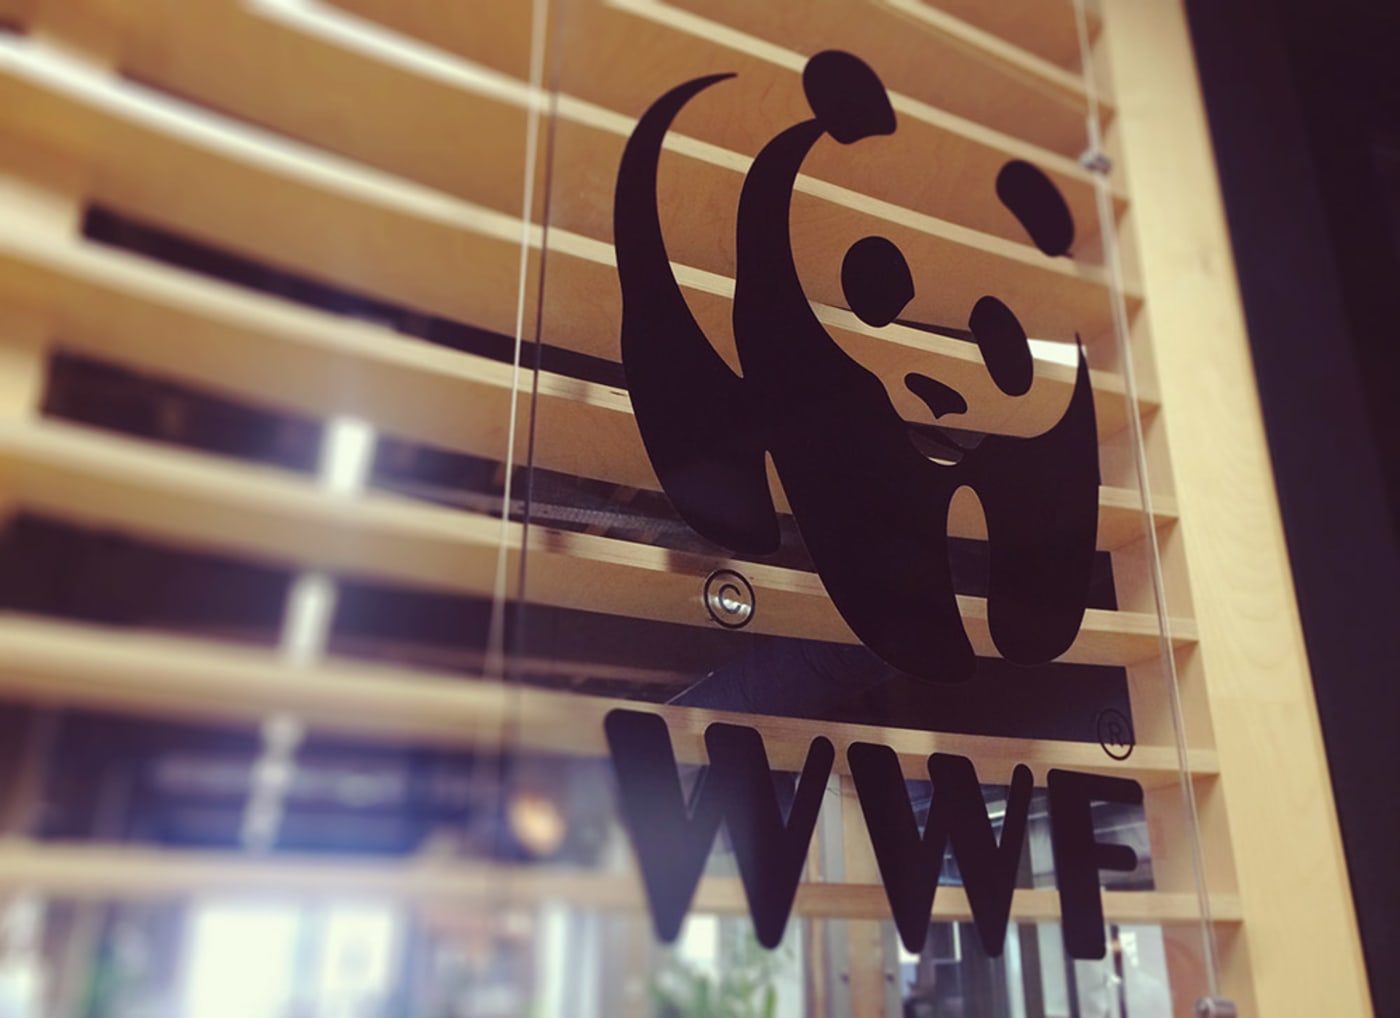 WWF Sydney office